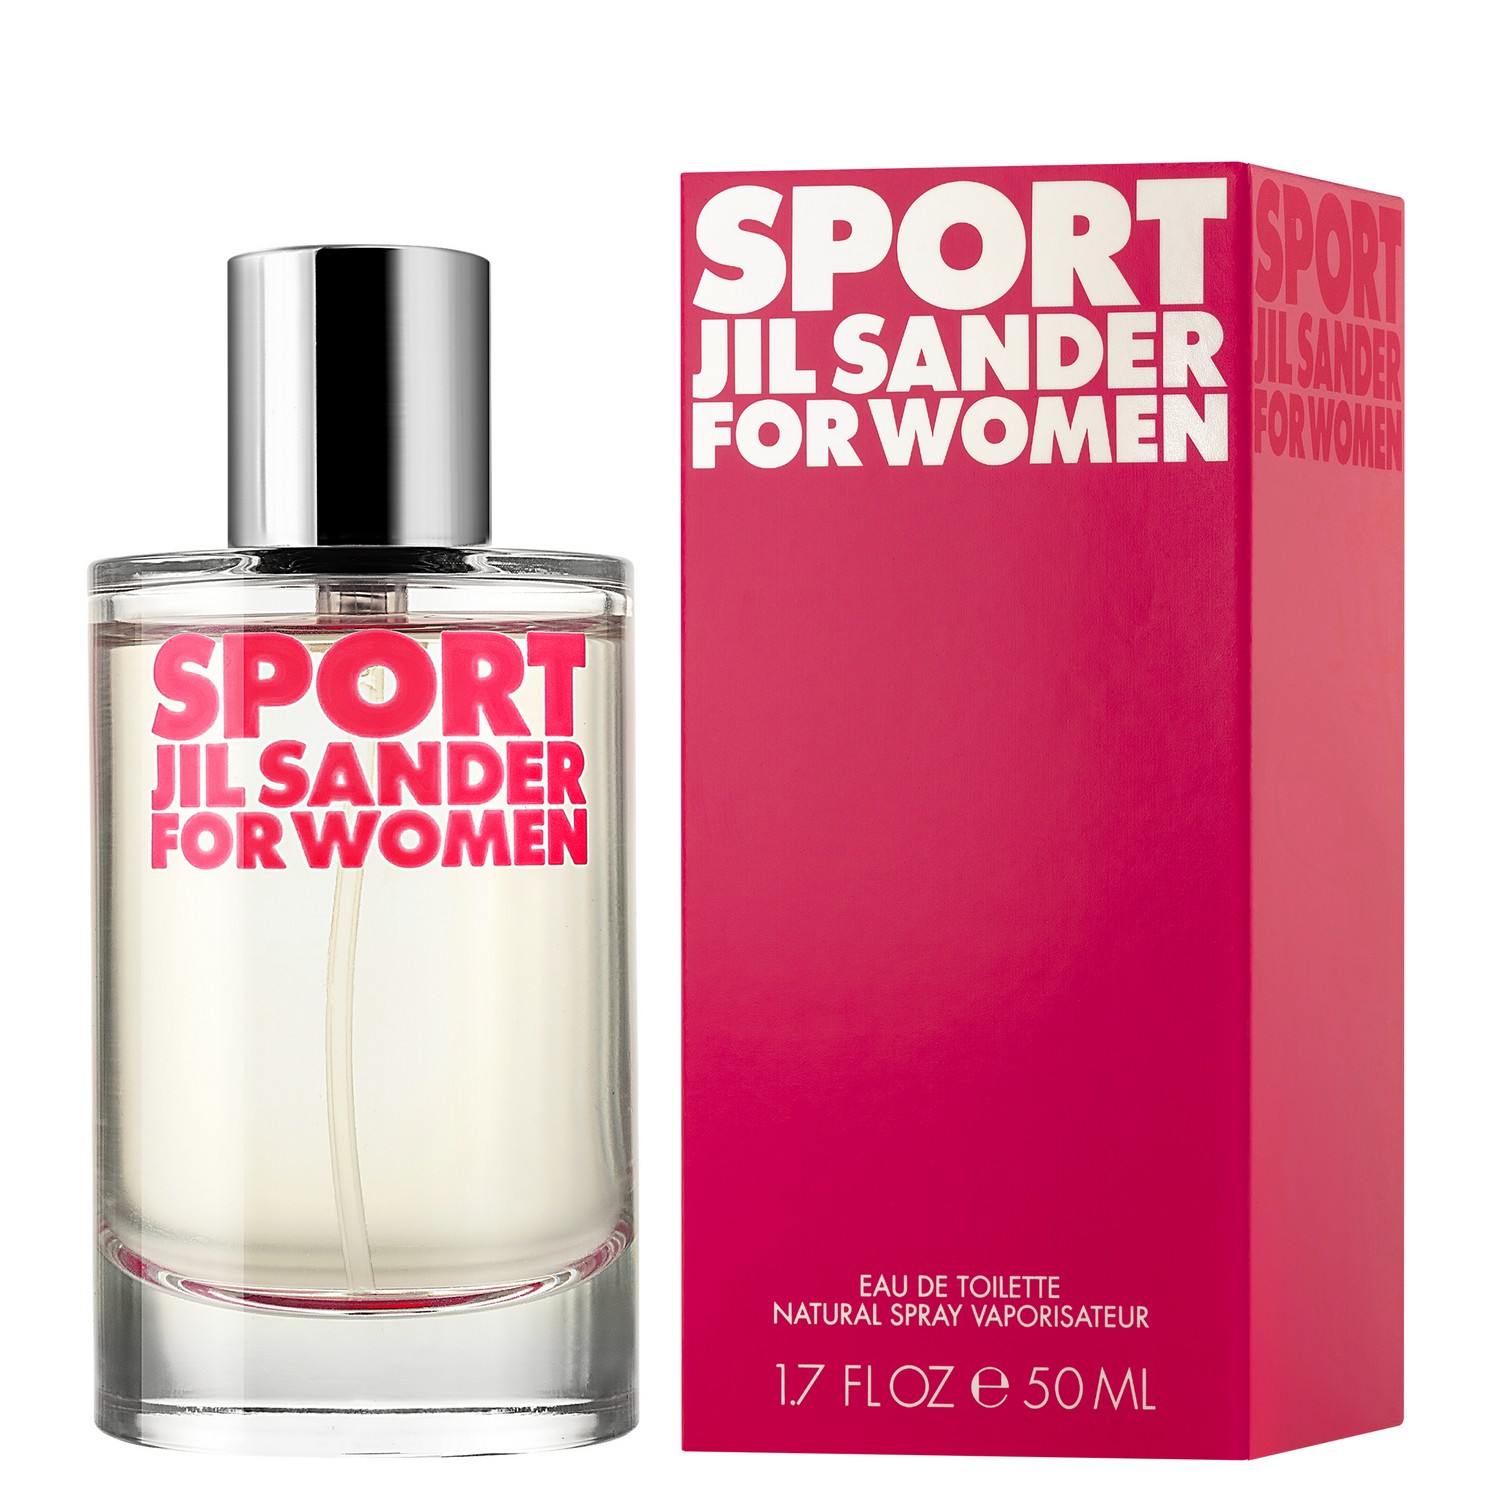 Jil Sander Sport for Woman Eau de Toilette 50ml